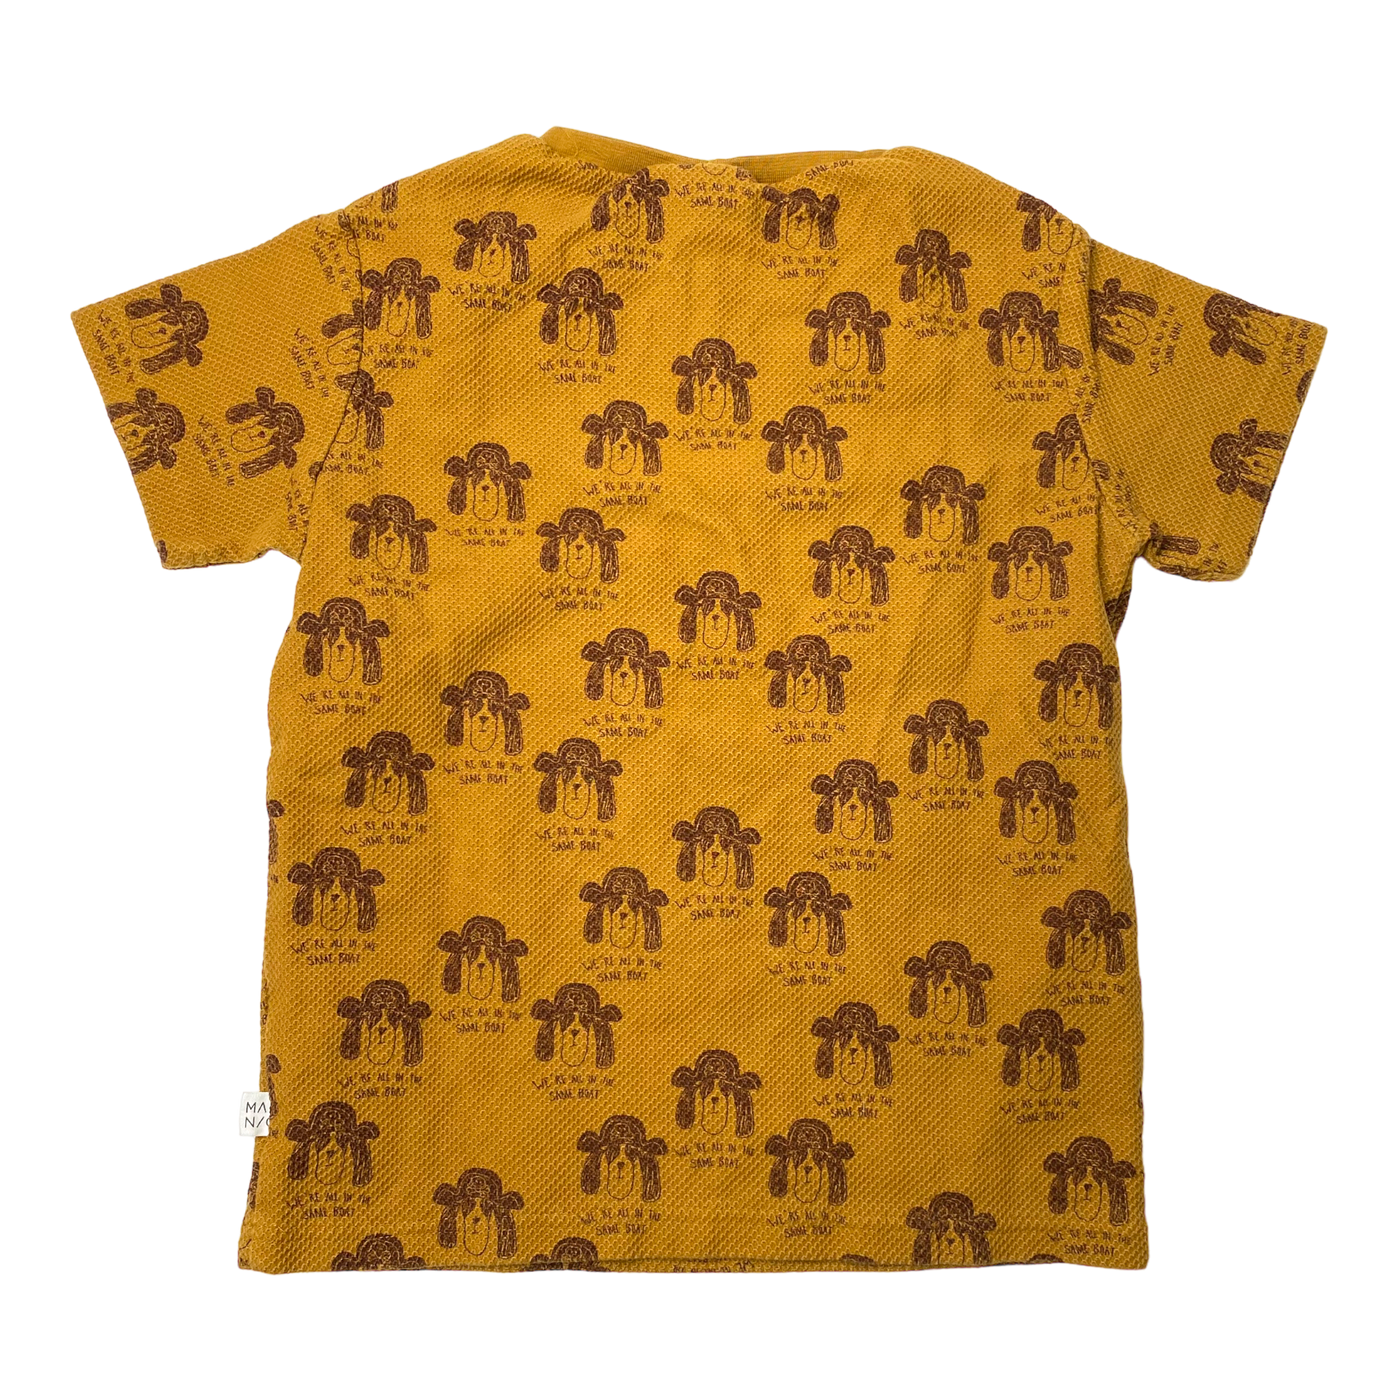 Mainio waffle t-shirt, pirate dog | 134/140cm